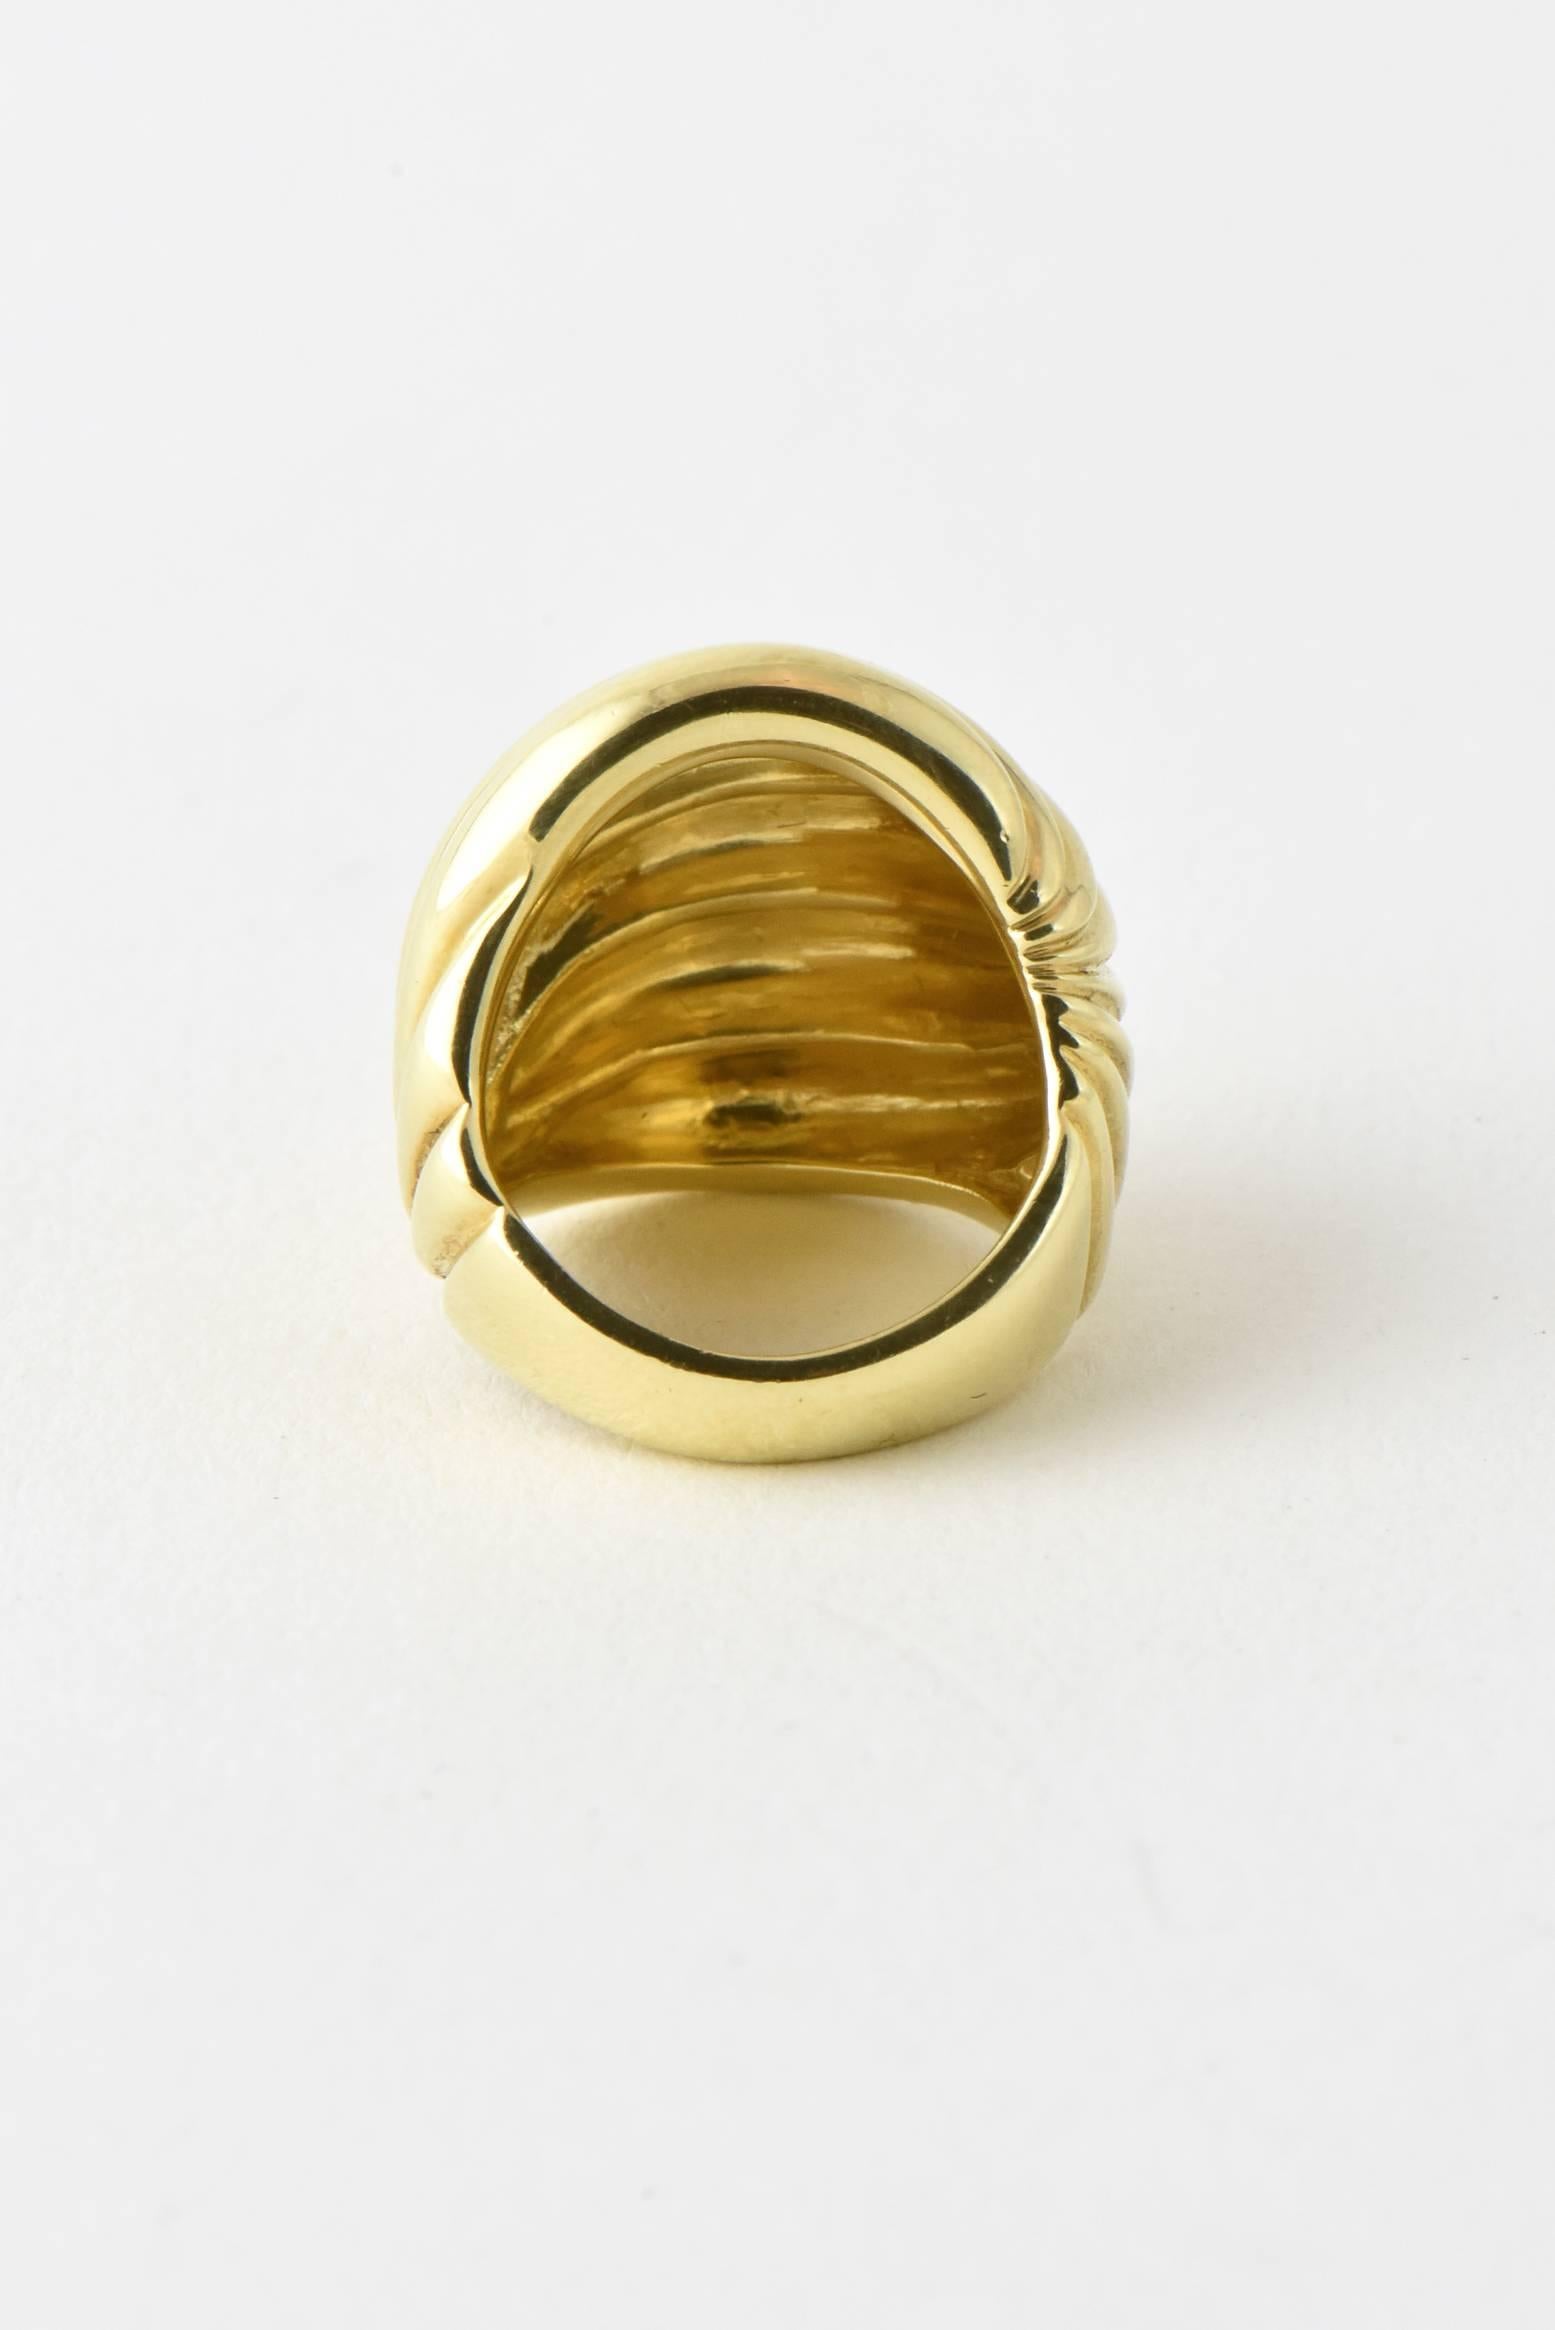 David Yurman Sculpted Gold Dome Ring In Excellent Condition In Miami Beach, FL